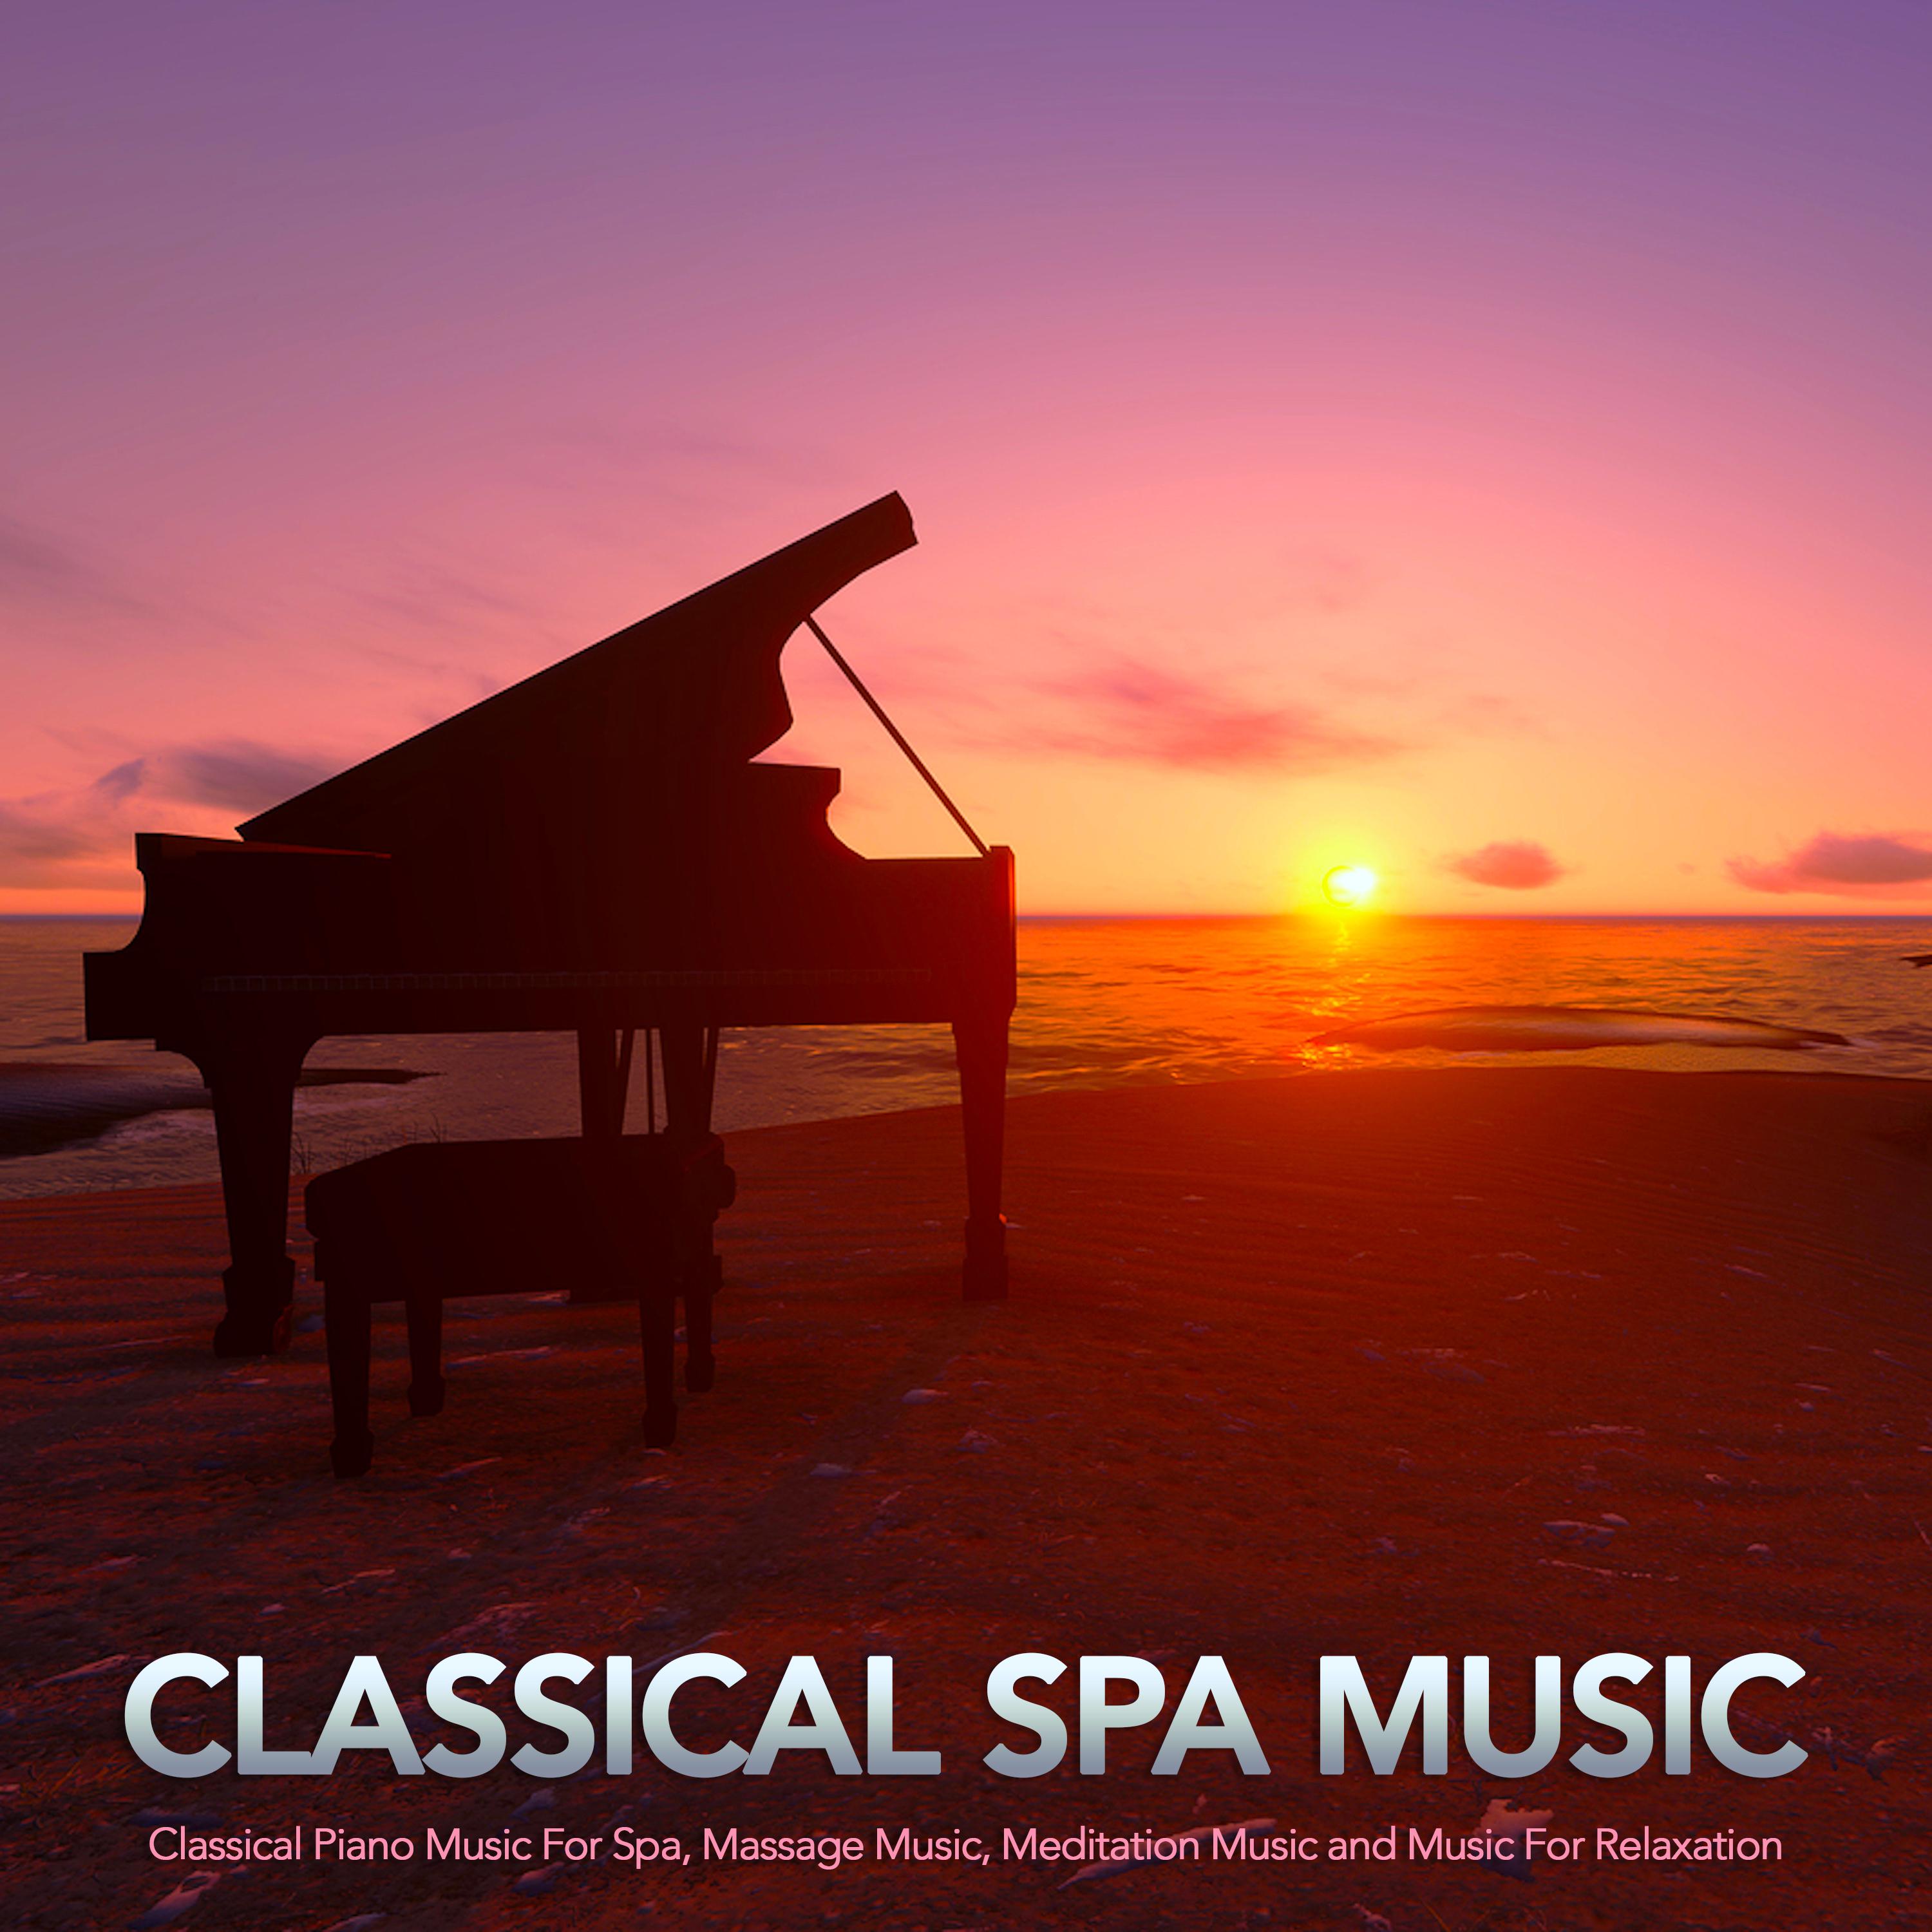 Arabesque - Debussy - Classical Piano Music - Spa Music